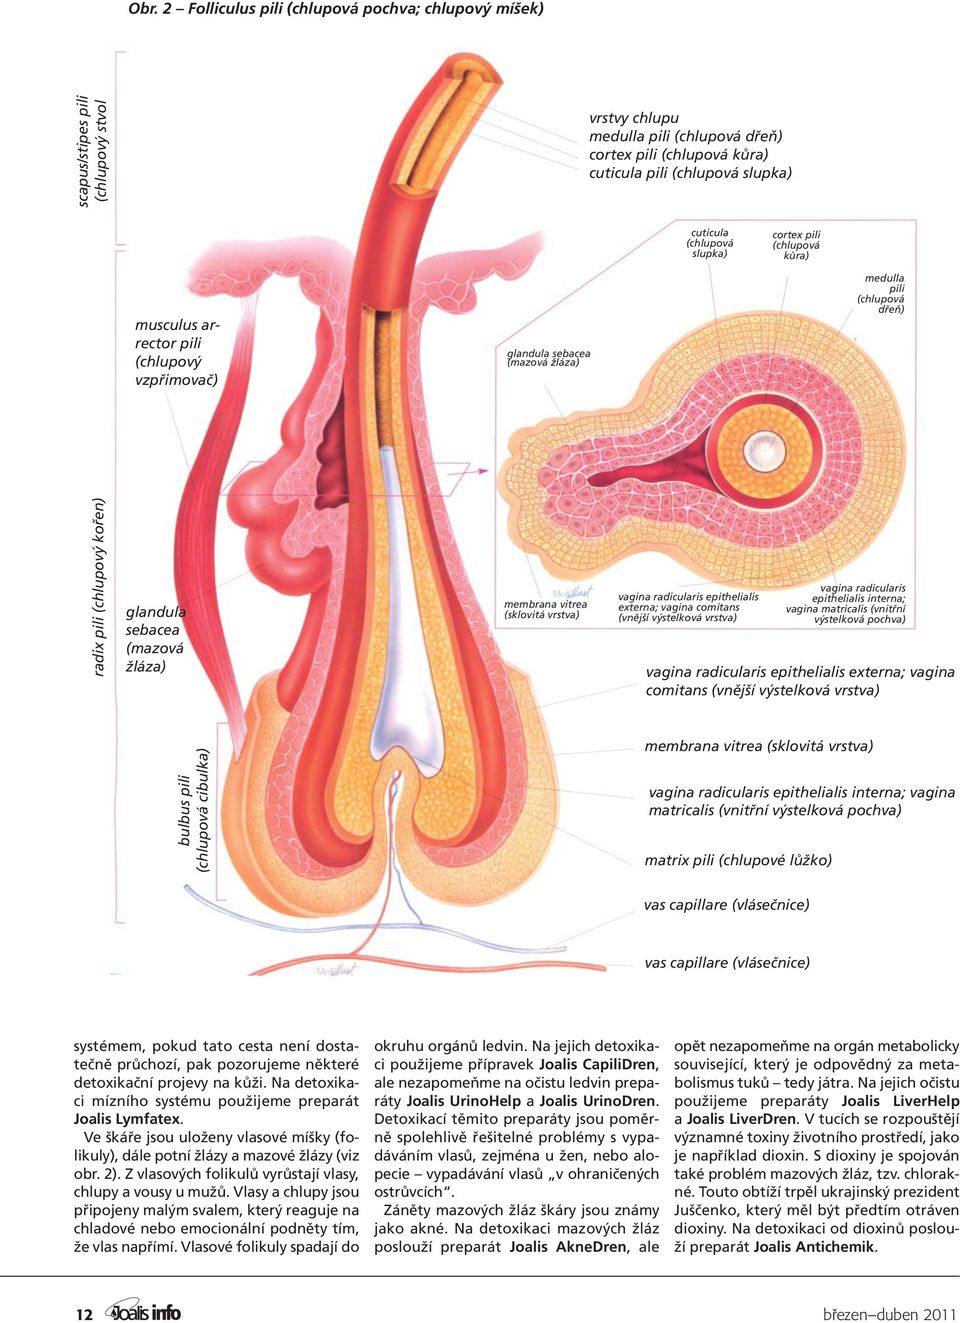 sebacea (mazová žláza) membrana vitrea (sklovitá vrstva) vagina radicularis epithelialis externa; vagina comitans (vnější výstelková vrstva) vagina radicularis epithelialis interna; vagina matricalis